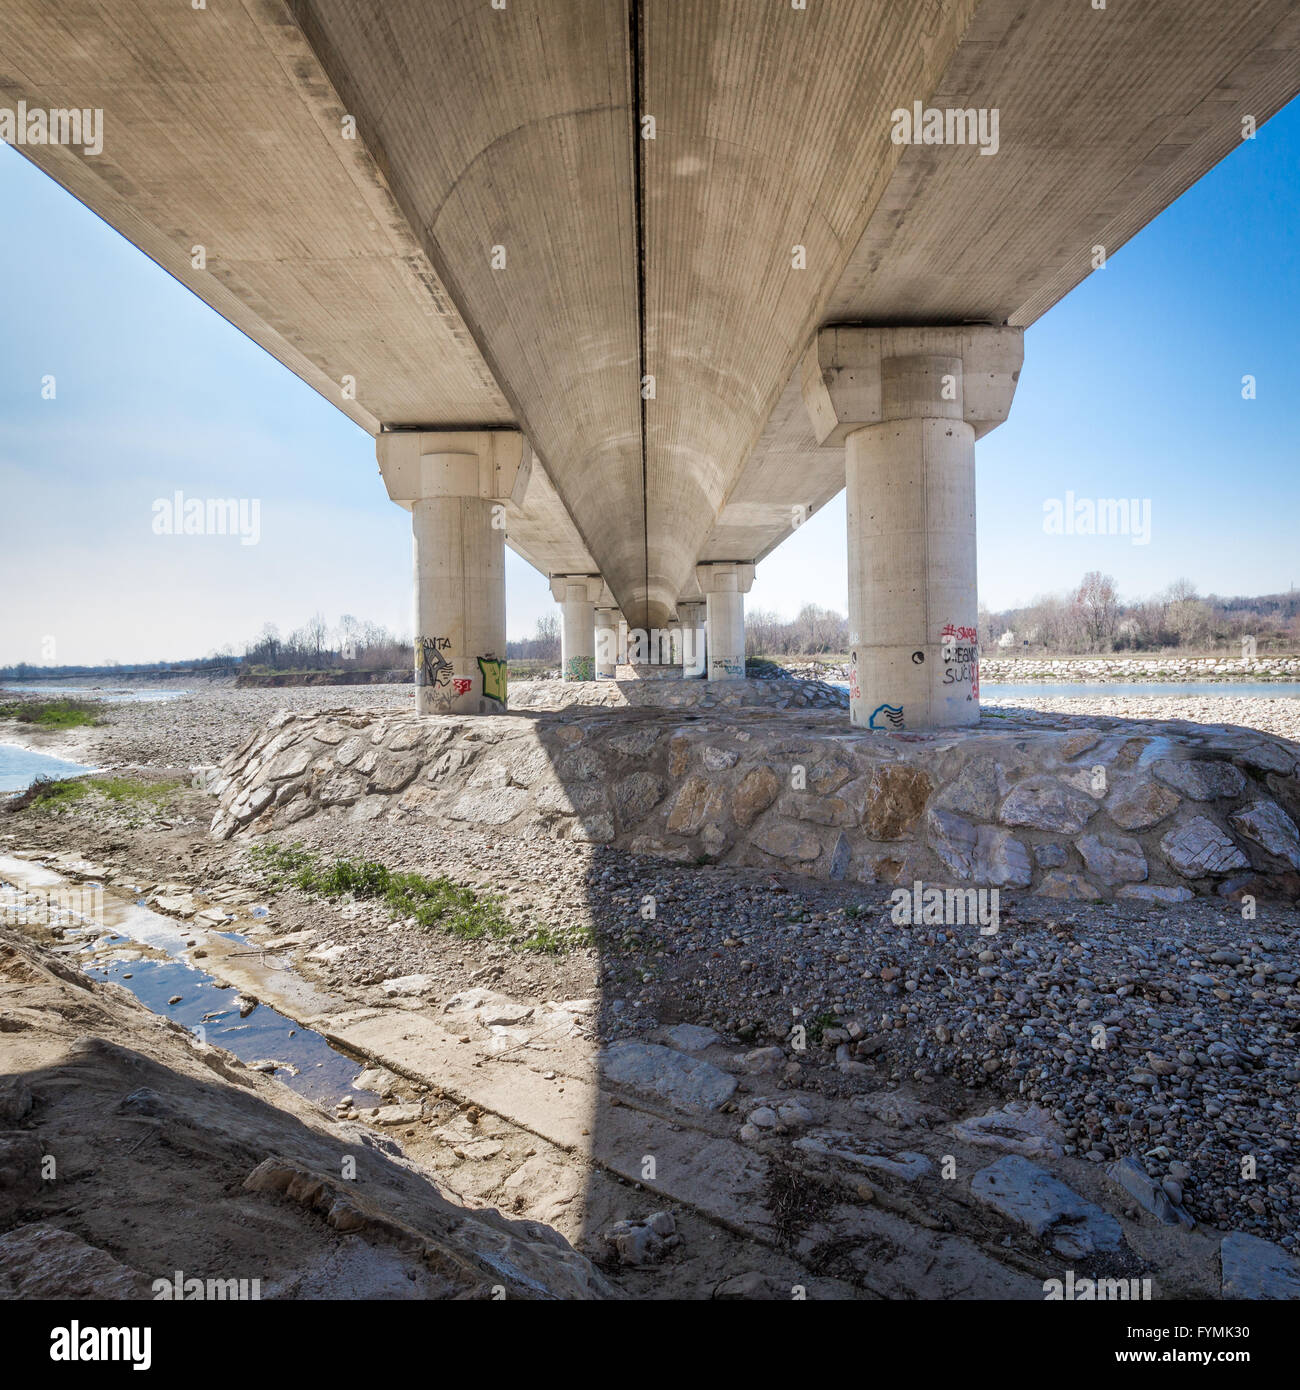 Under the old concrete bridge construction Stock Photo